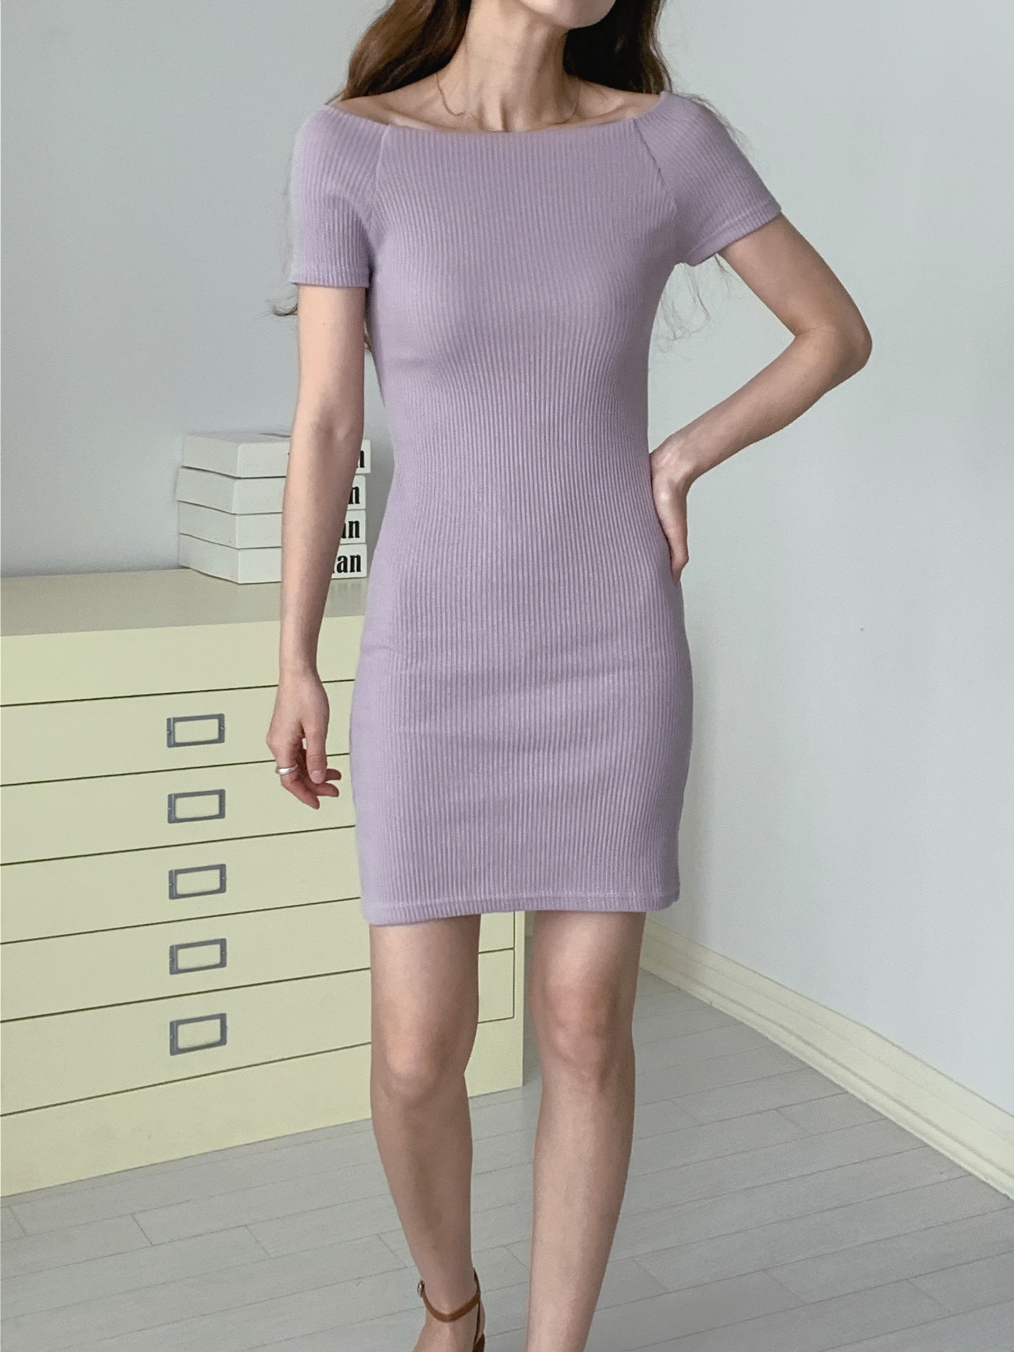 dress model image-S1L6